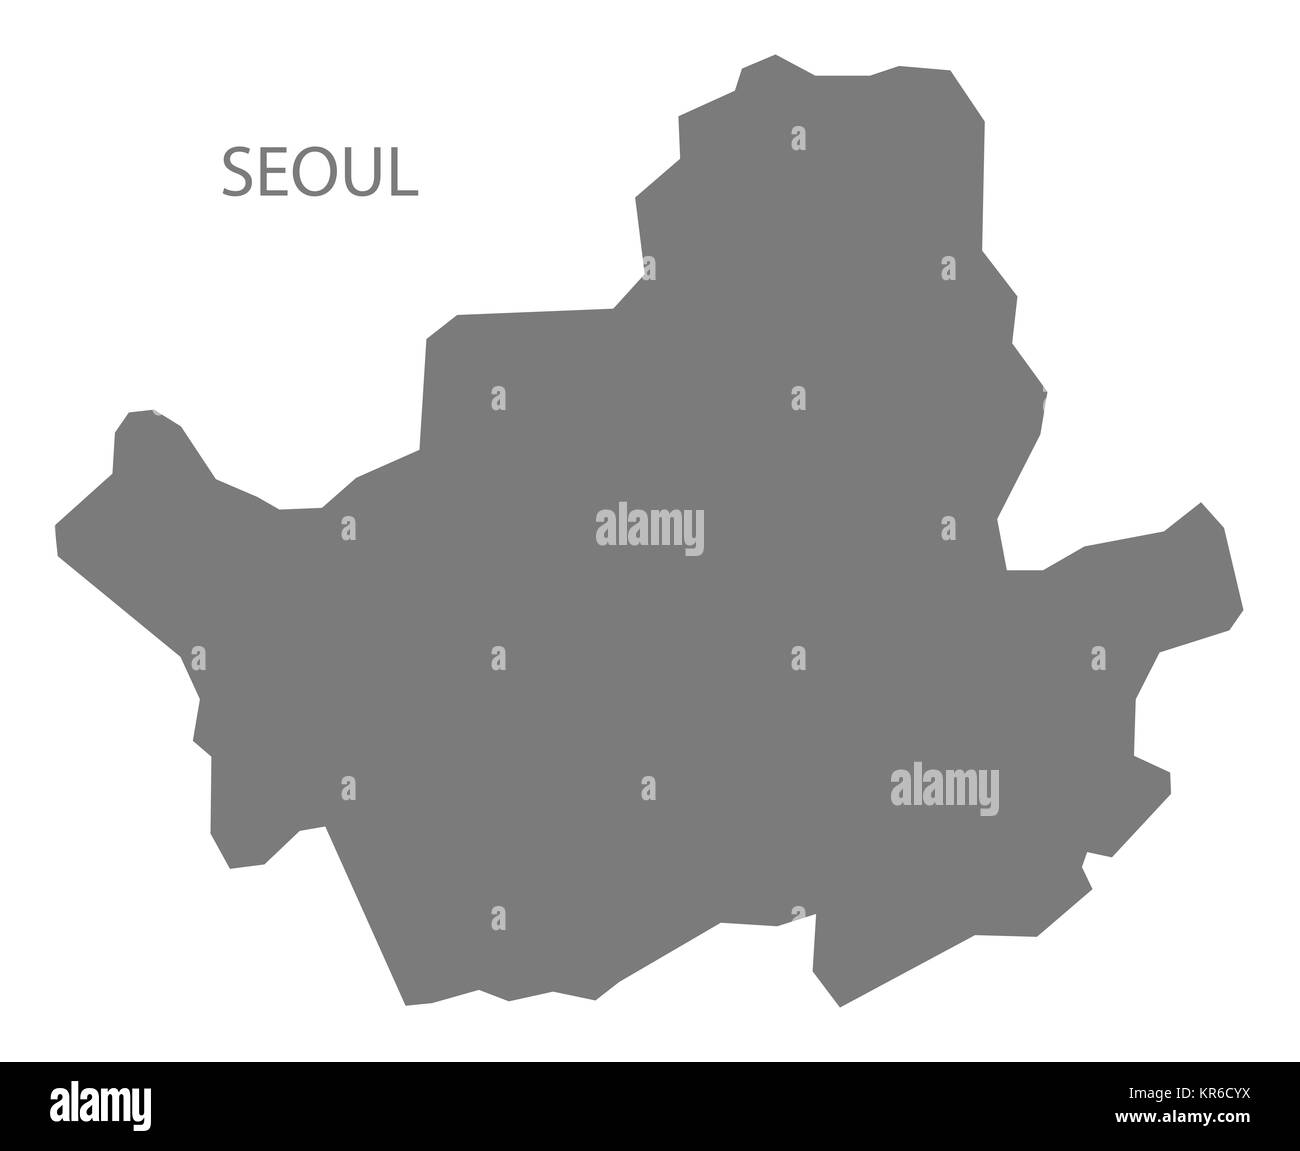 Seoul South Korea Map grey Stock Photo